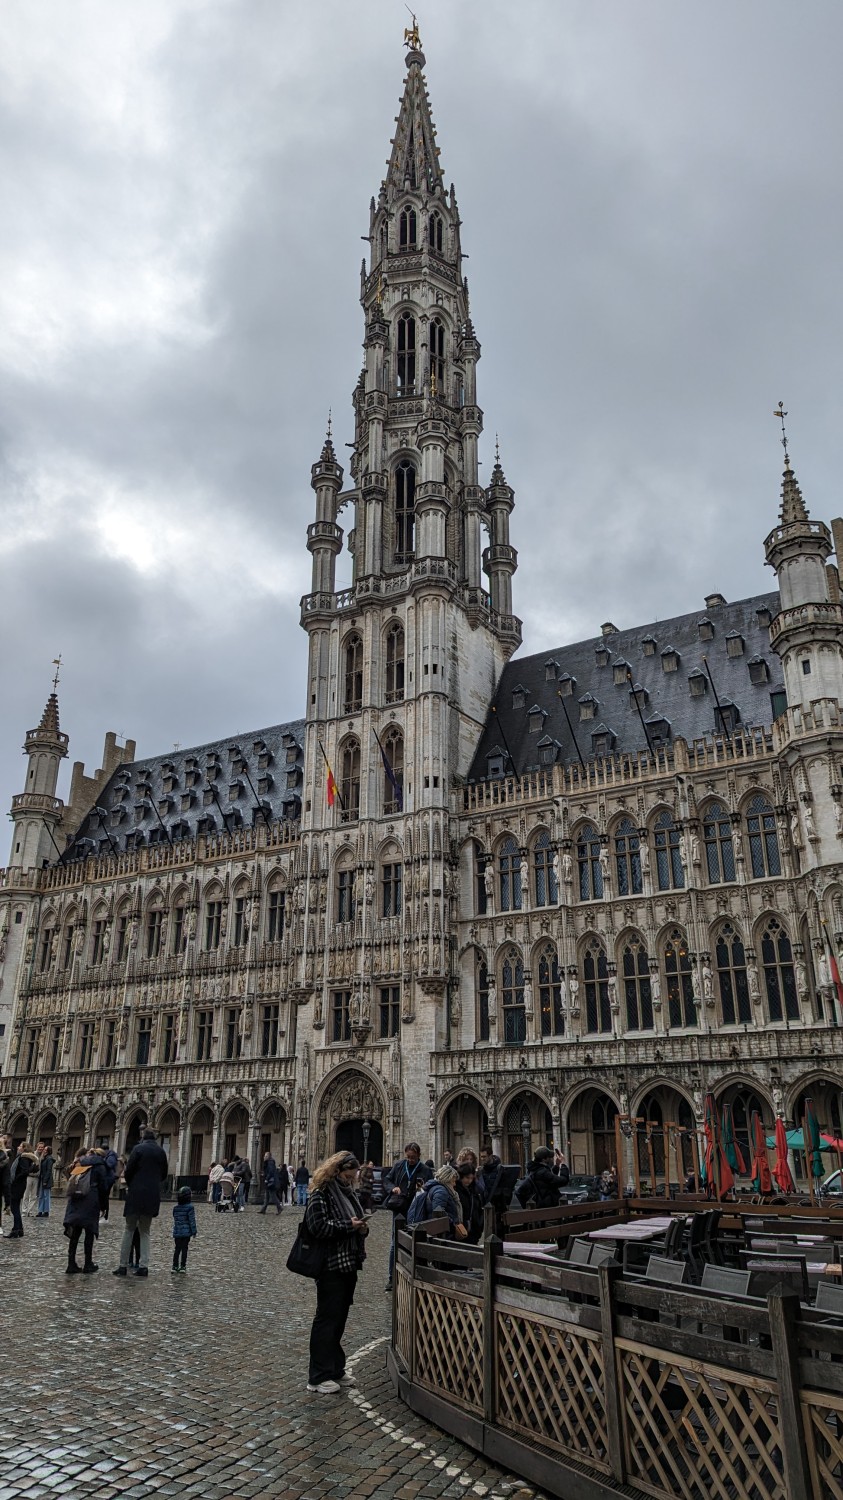 Visit Brussels, it's nice